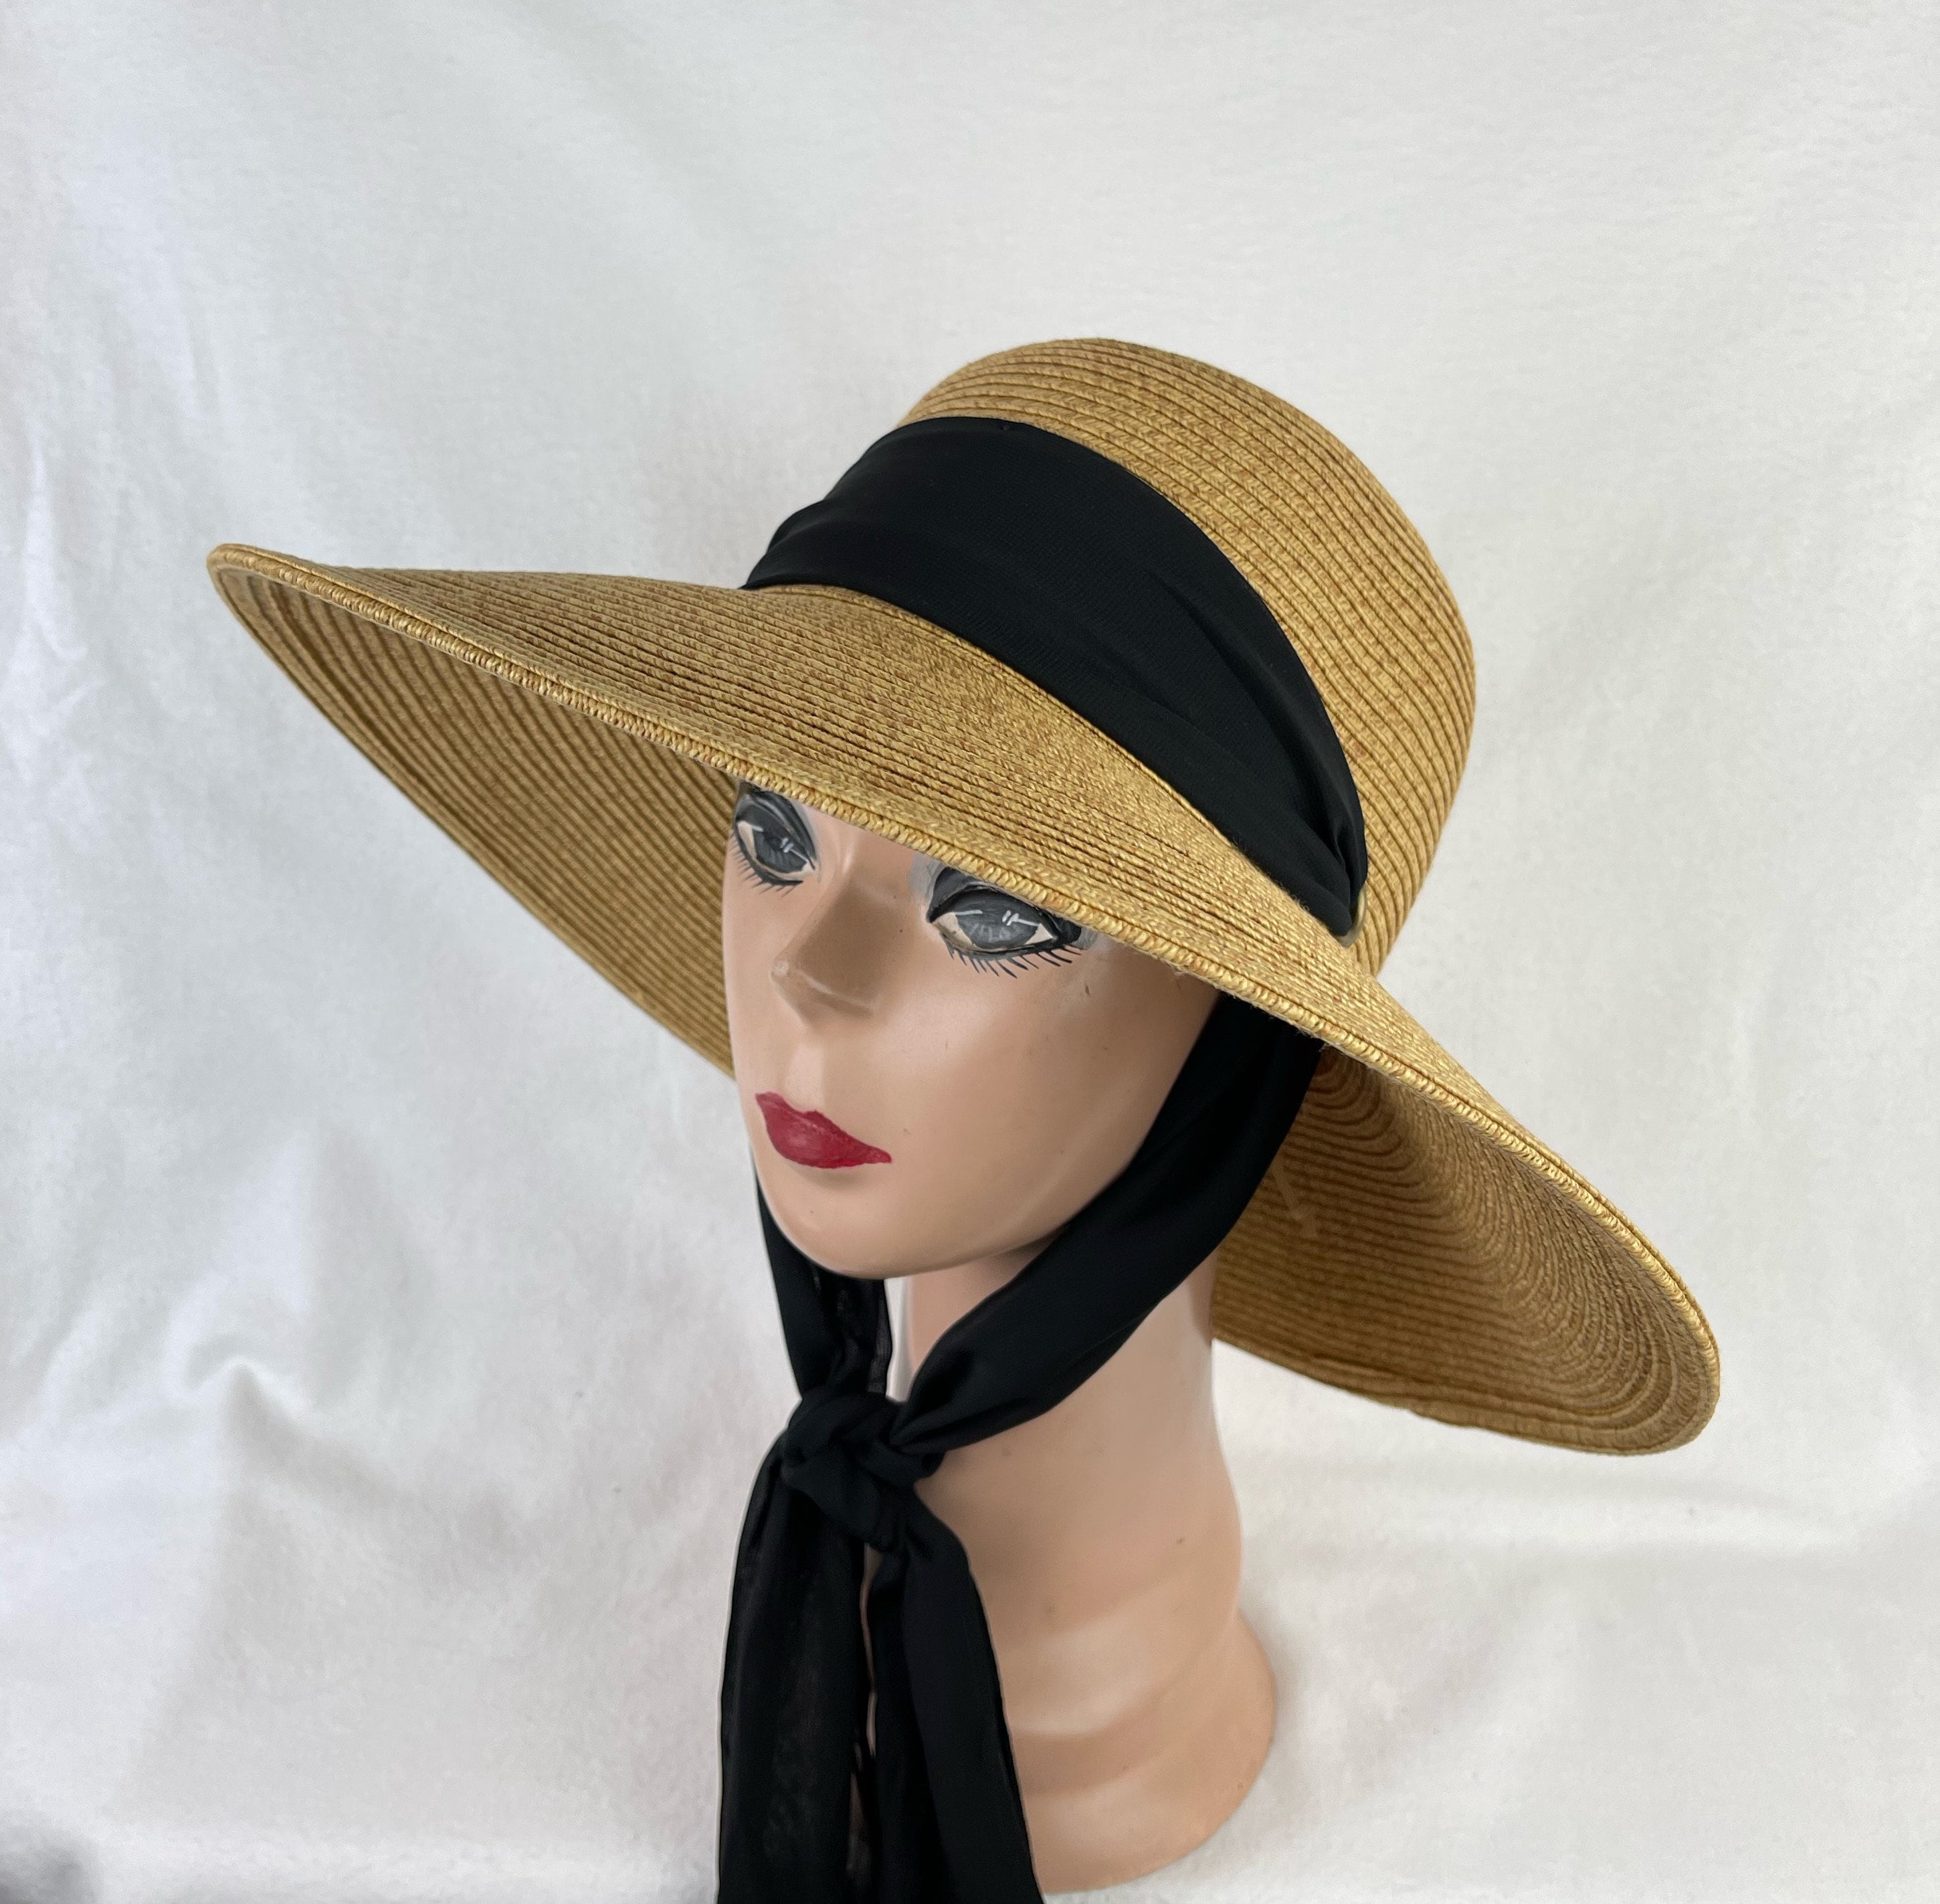 Wheat Color 4 Inch Downturn Brim Straw Hat With Changeable Scarf Trim / Sun Hat With Chin Tie / Straw LG Brim Beach Hat / Retro Sun Hat